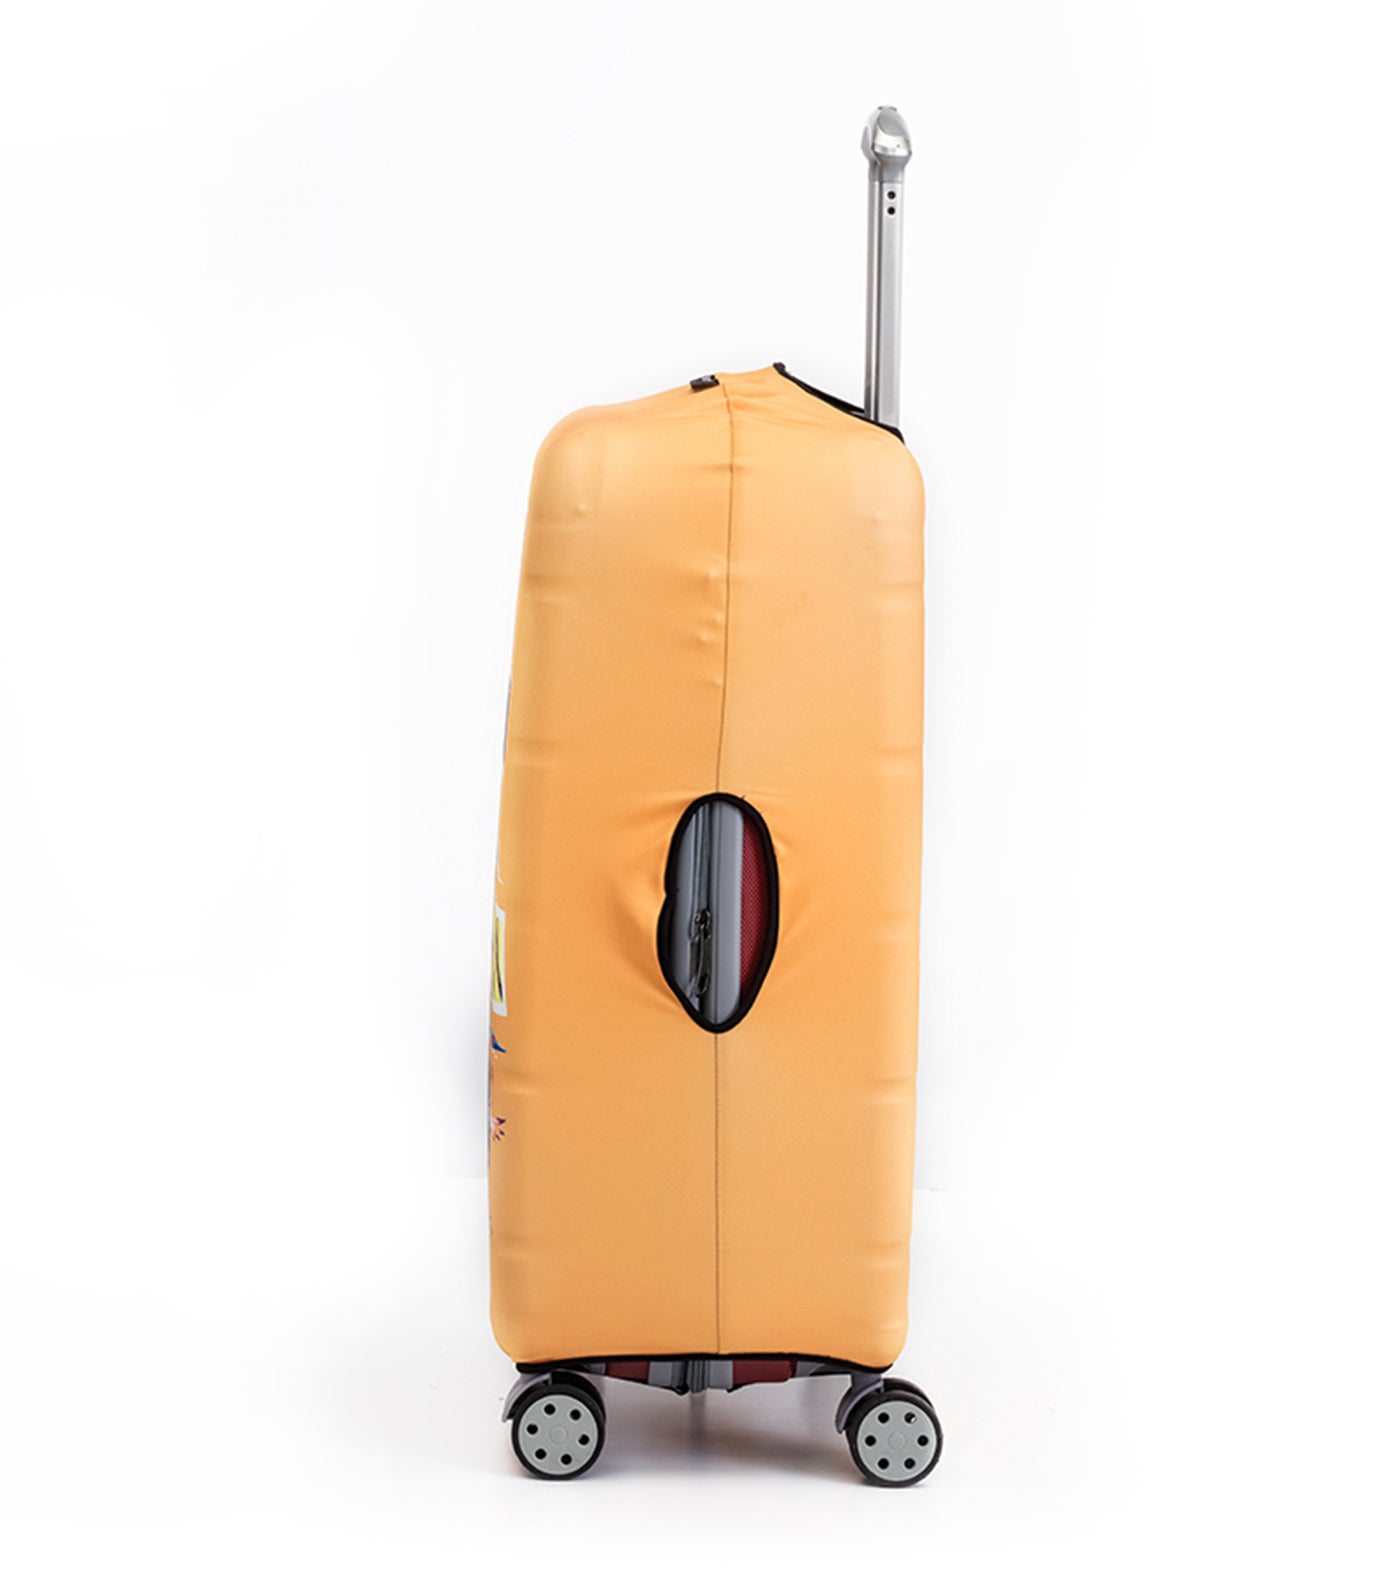 Discover Philippines Luggage Cover Medium